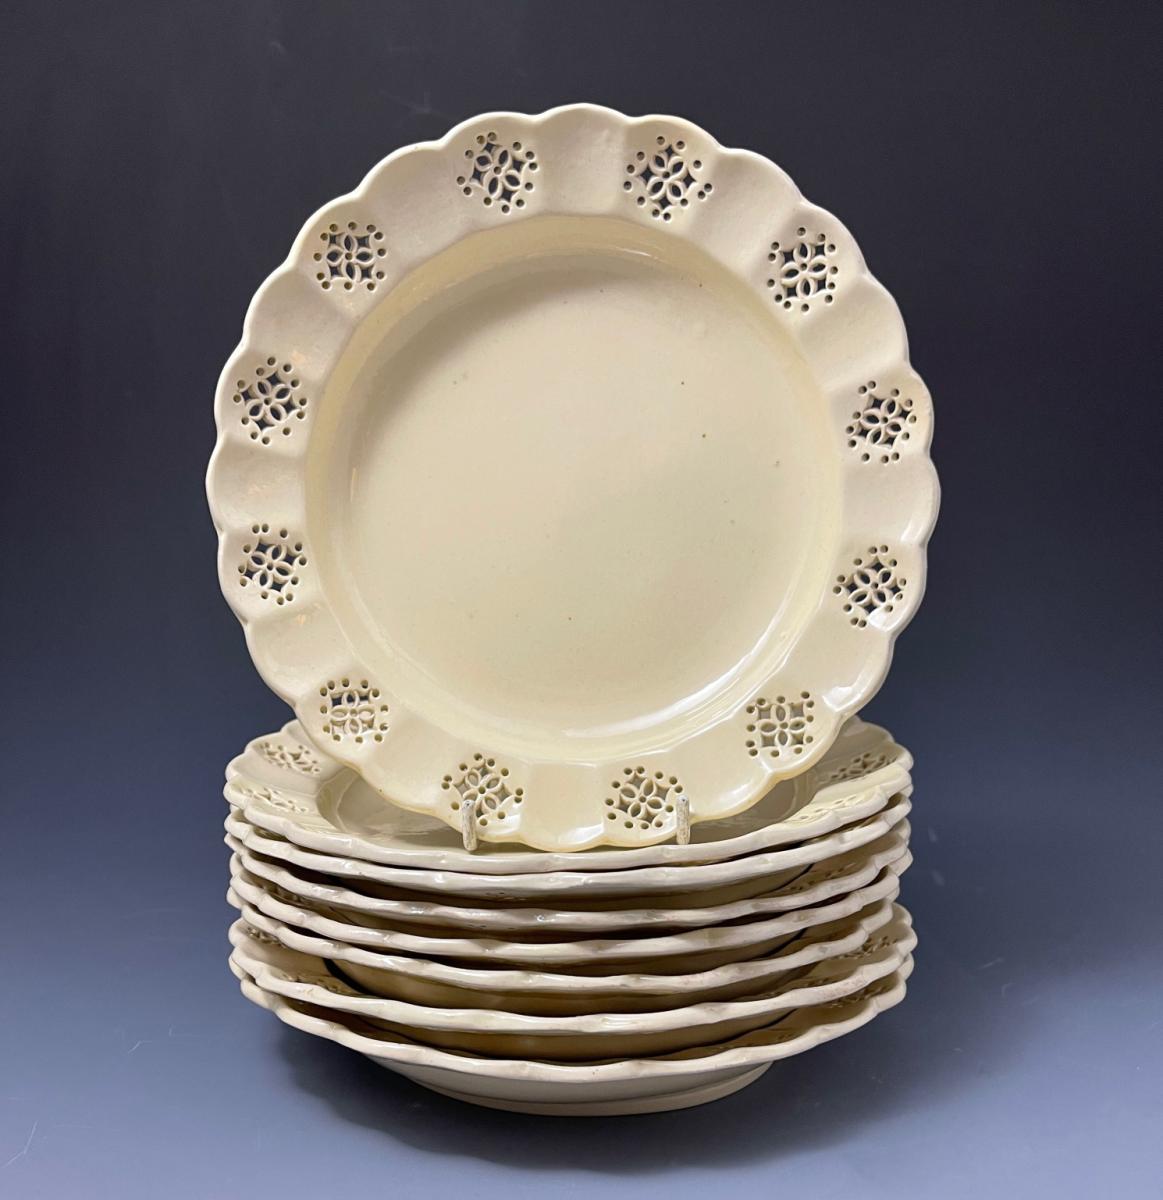 Set of Eight English creamware pottery plates, late 18th century